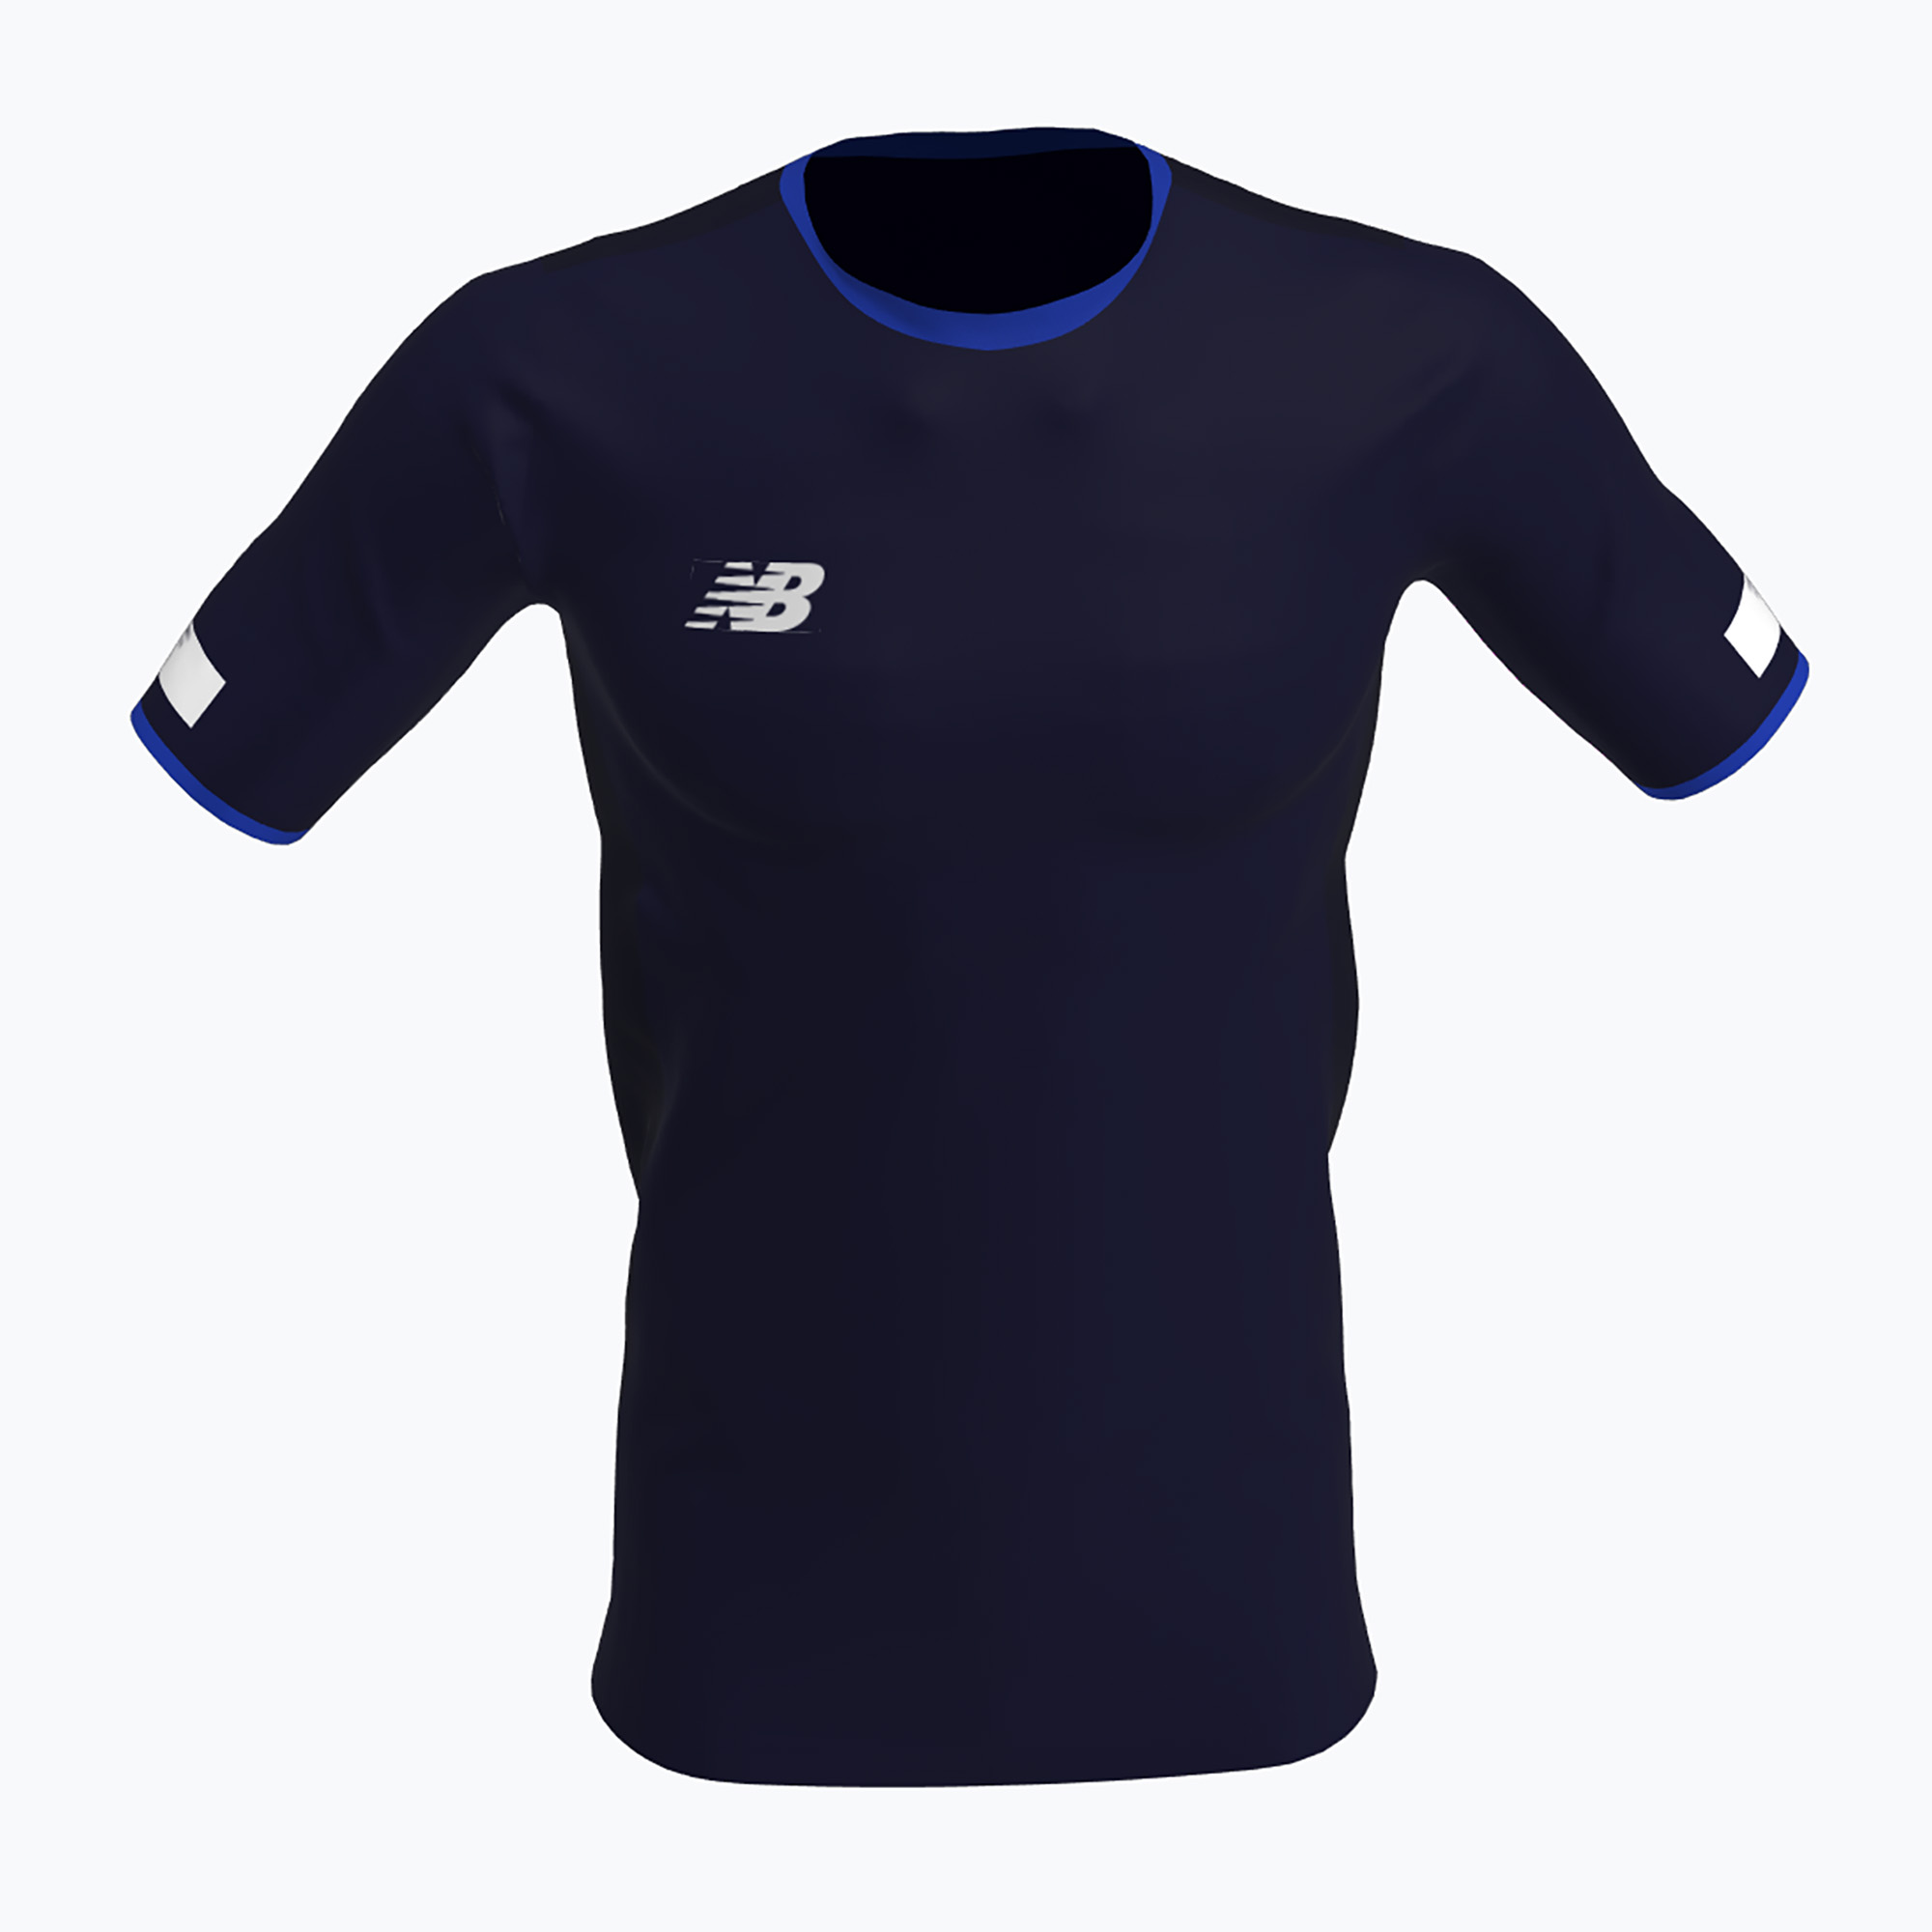 Detské futbalové tričko New Balance Turf tmavomodré NBEJT9018